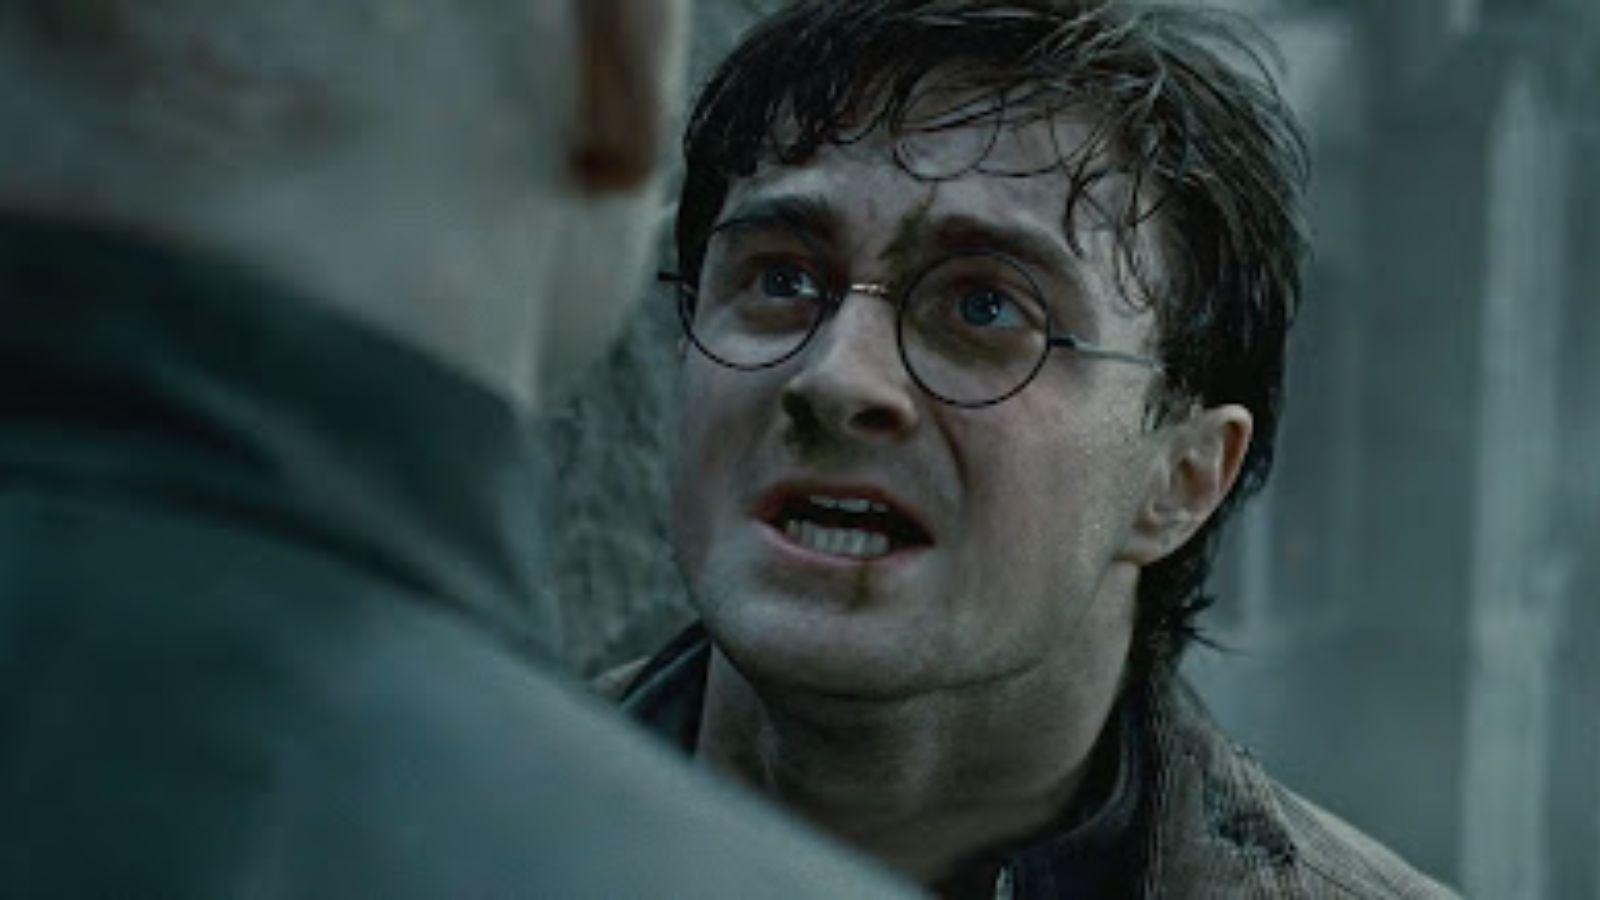 Daniel Radliffe as Harry Potter in Deathly Hallows Part 2.